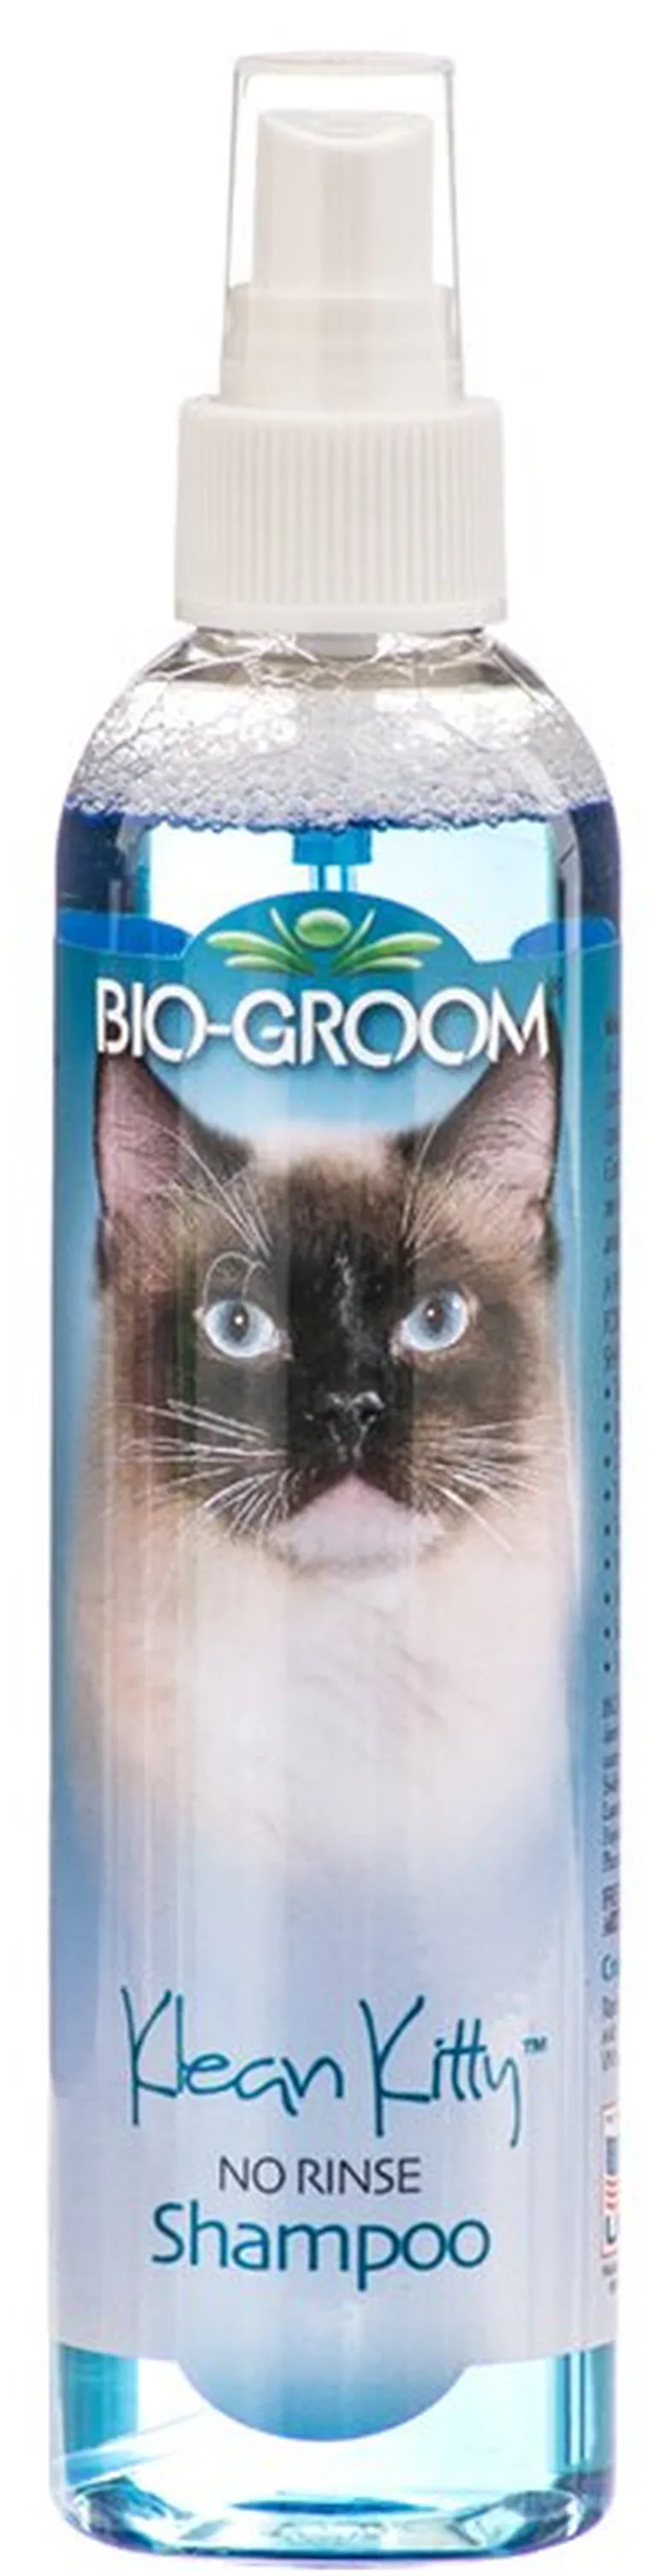 Bio Groom Waterless Klean Kitty Shampoo Photo 2